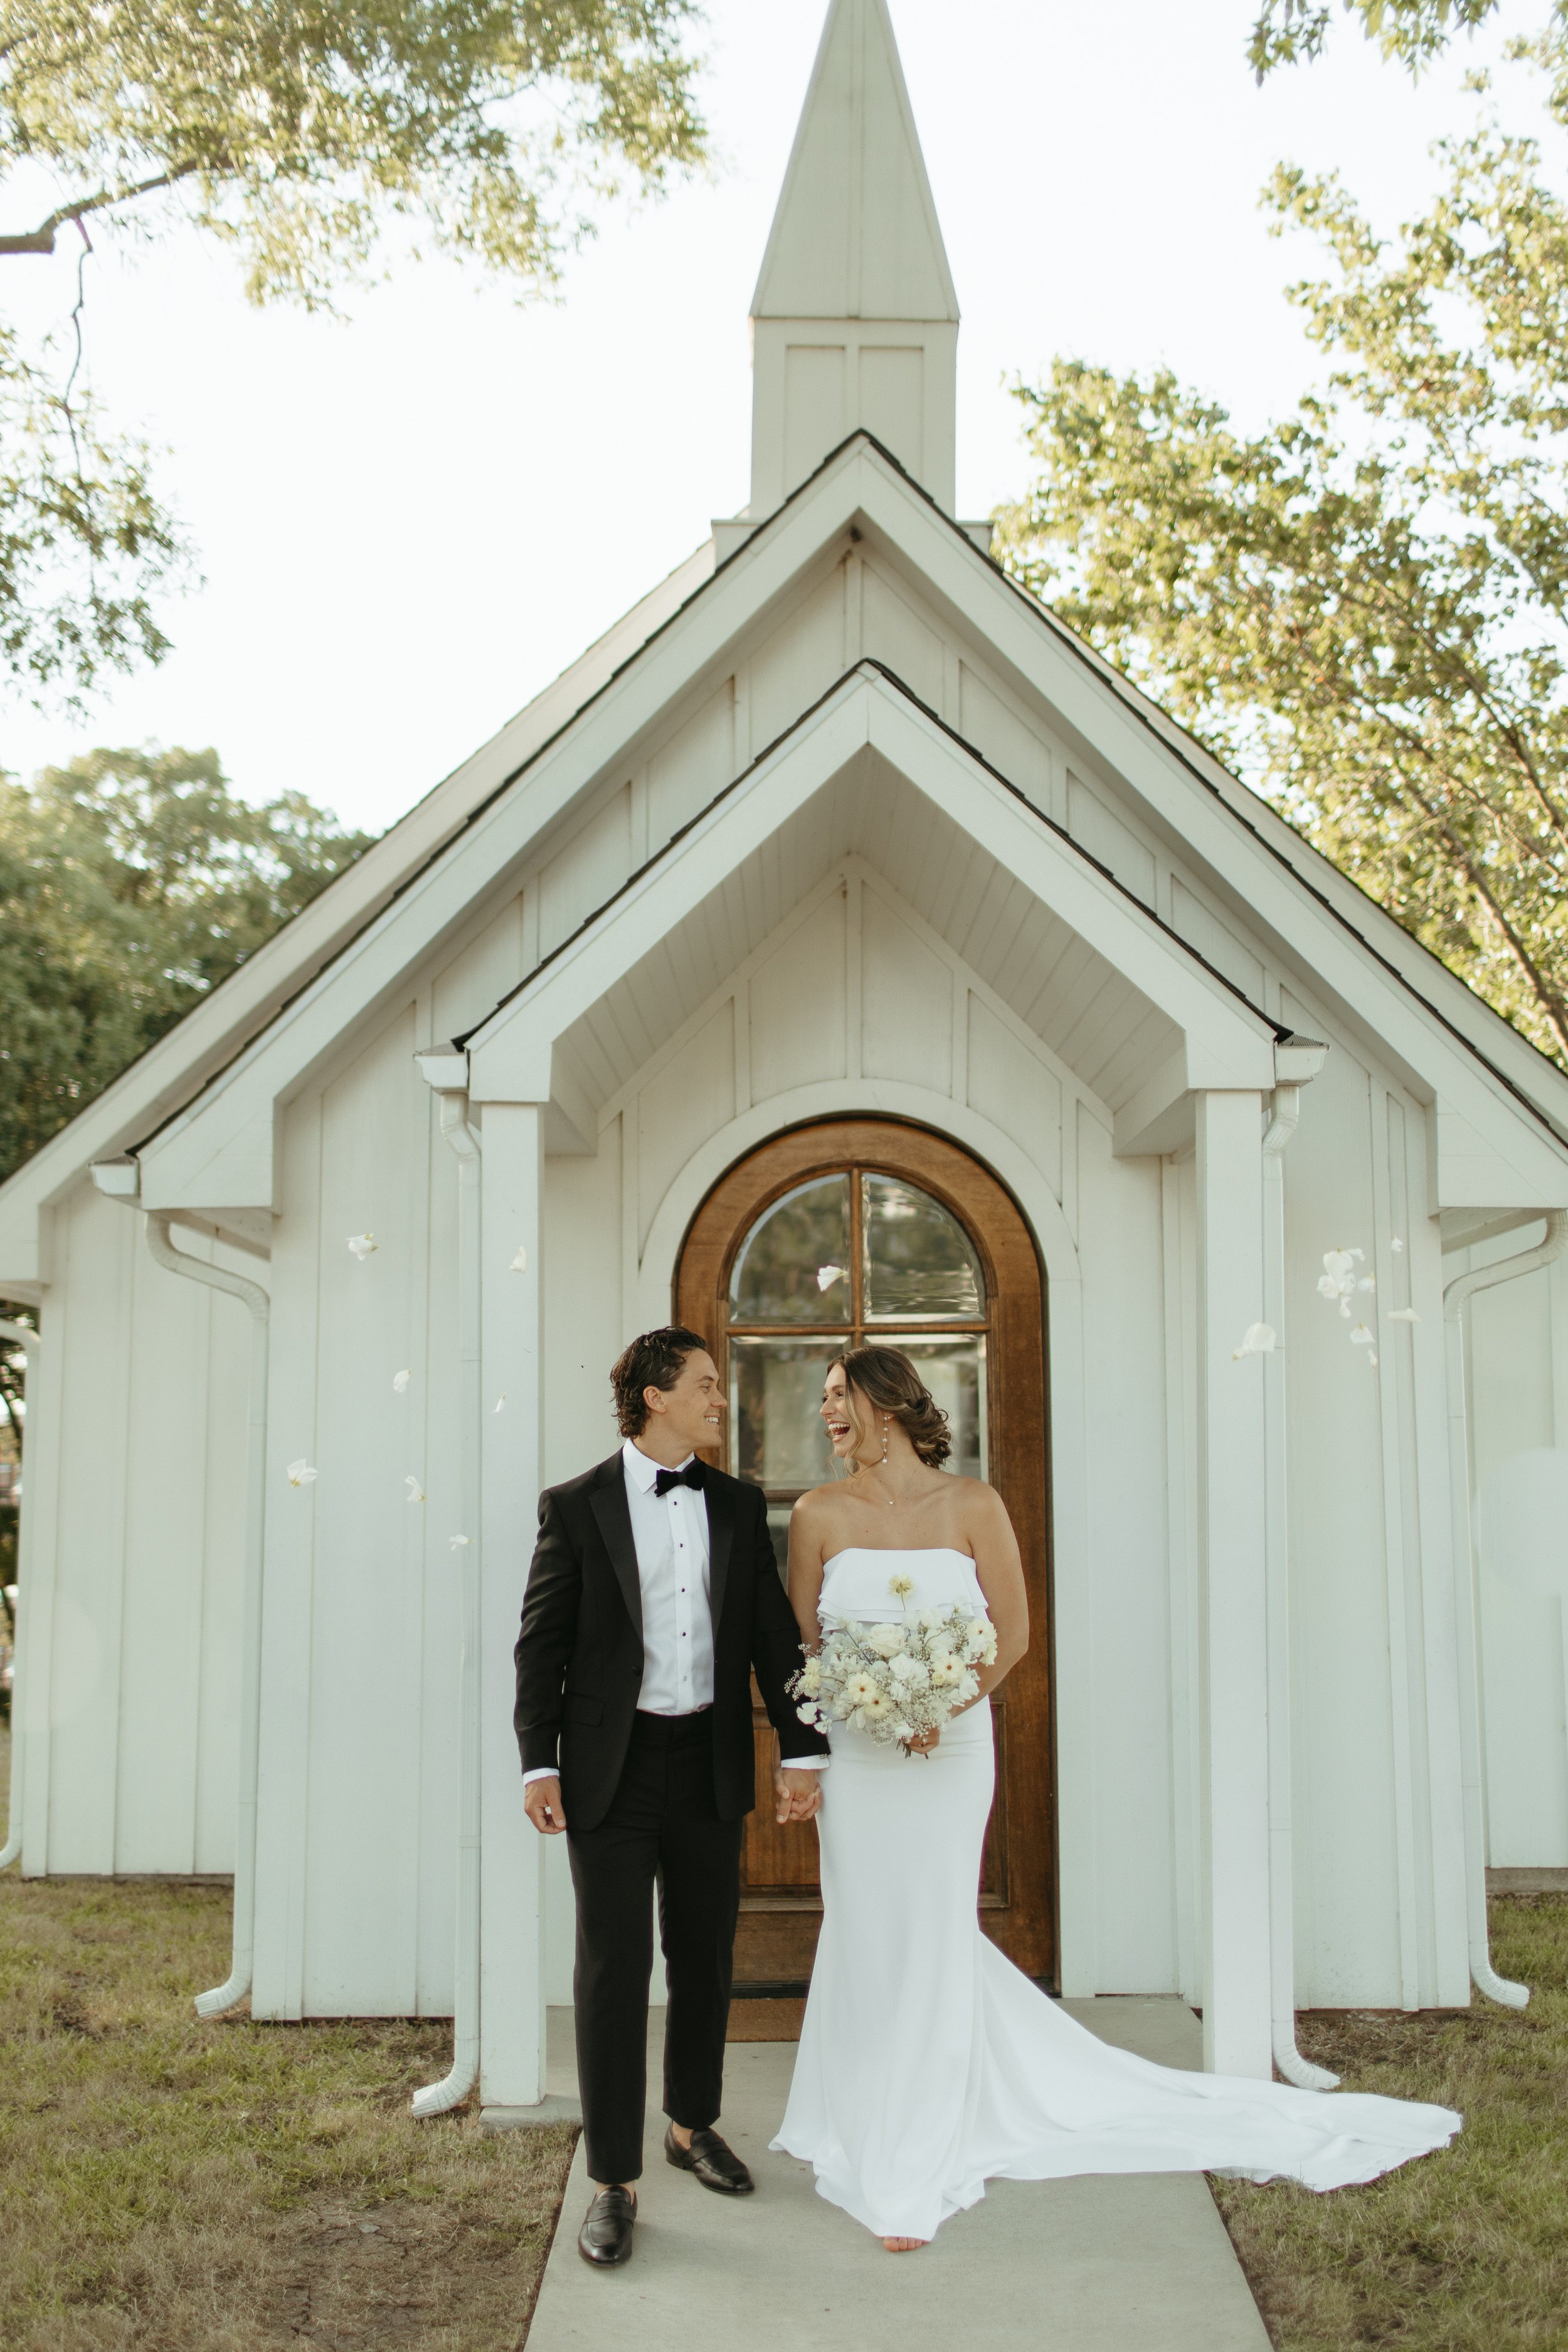 poppy-alyssa-kristin-wedding-dress-at-the-emerson-venue-texas-kyra-nowl-photography_15.jpg